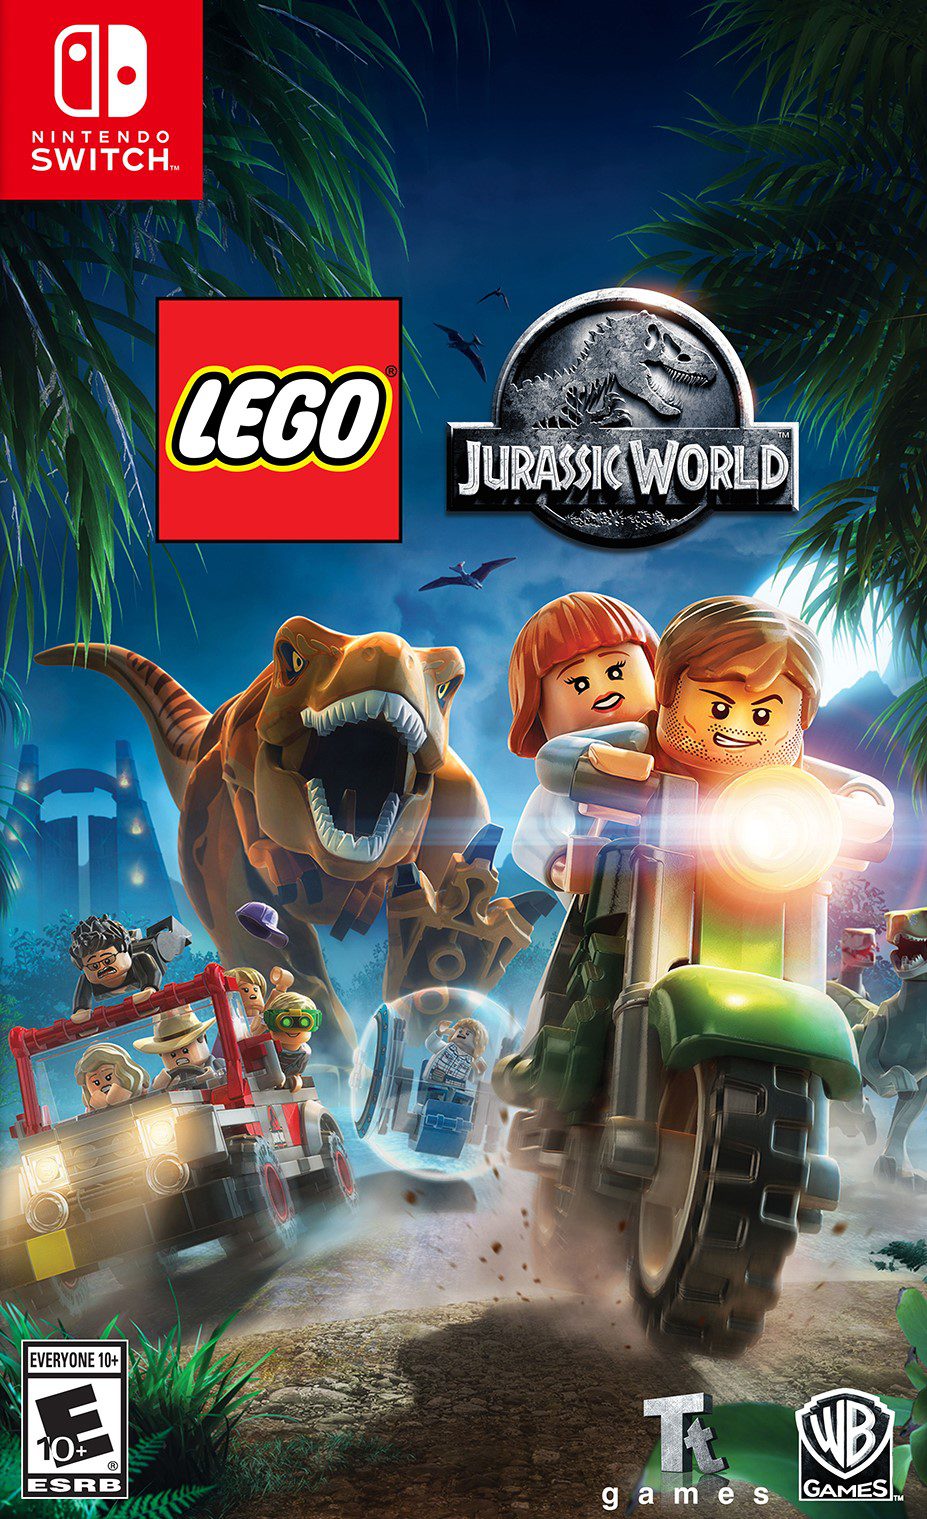 LEGO Jurassic World for Nintendo Switch